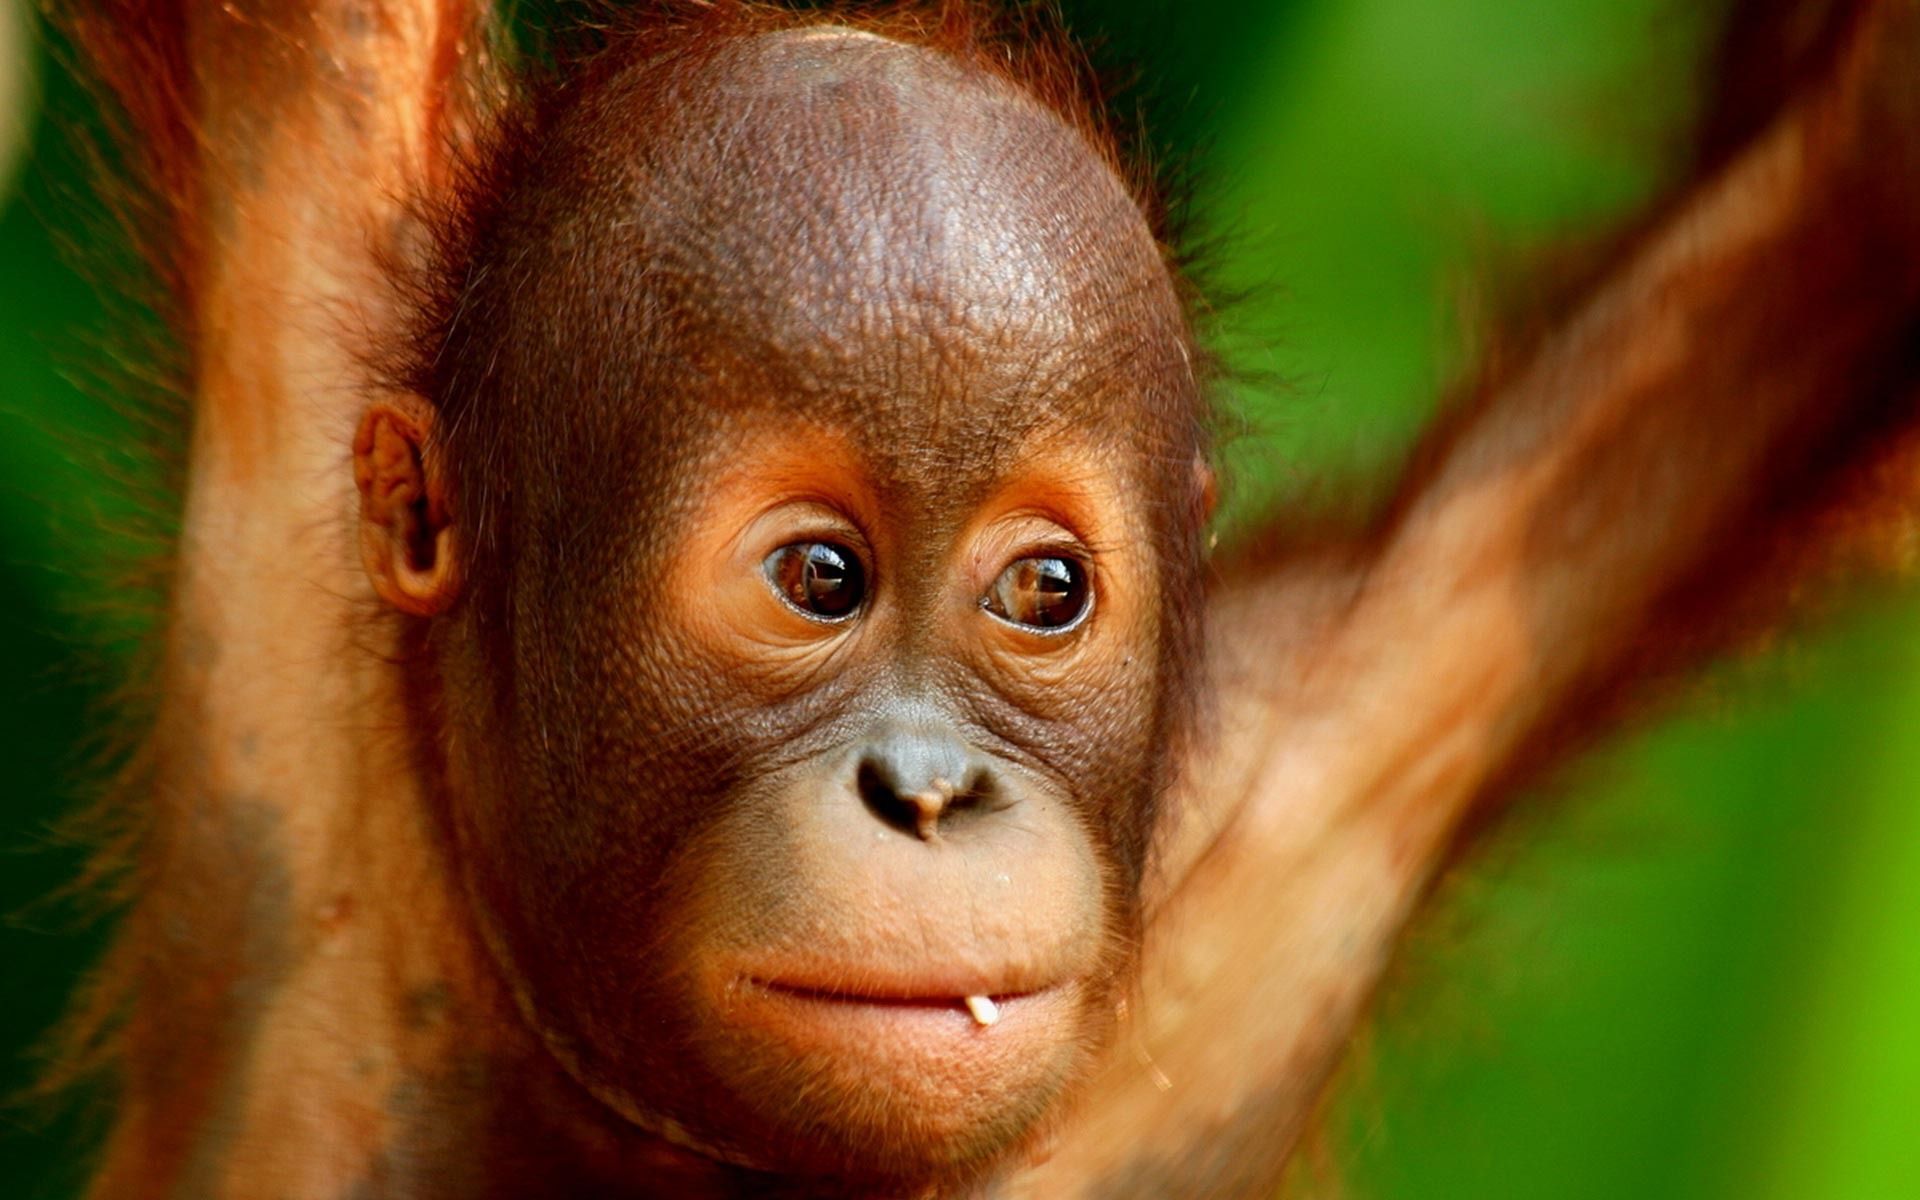 Orangutan Wallpaper And Background Image